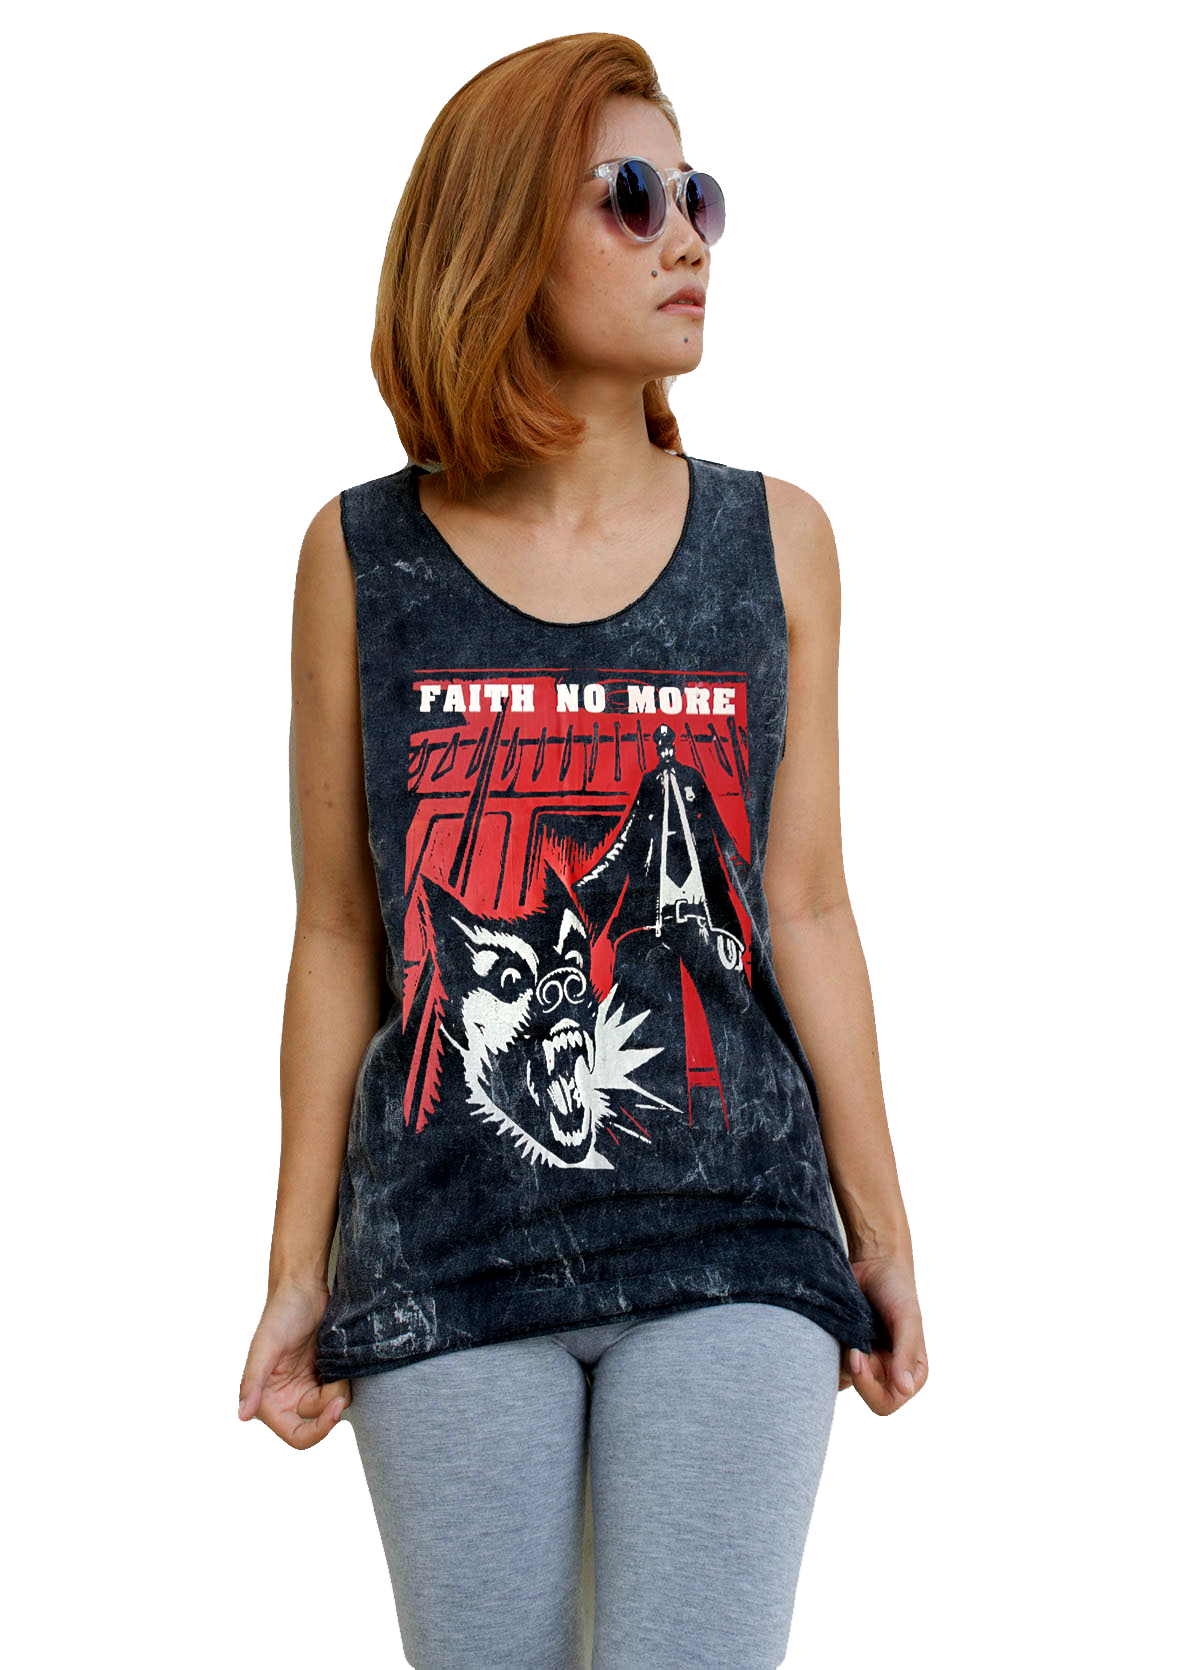 Unisex Faith No More Tank-Top Singlet vest Sleeveless T-shirt